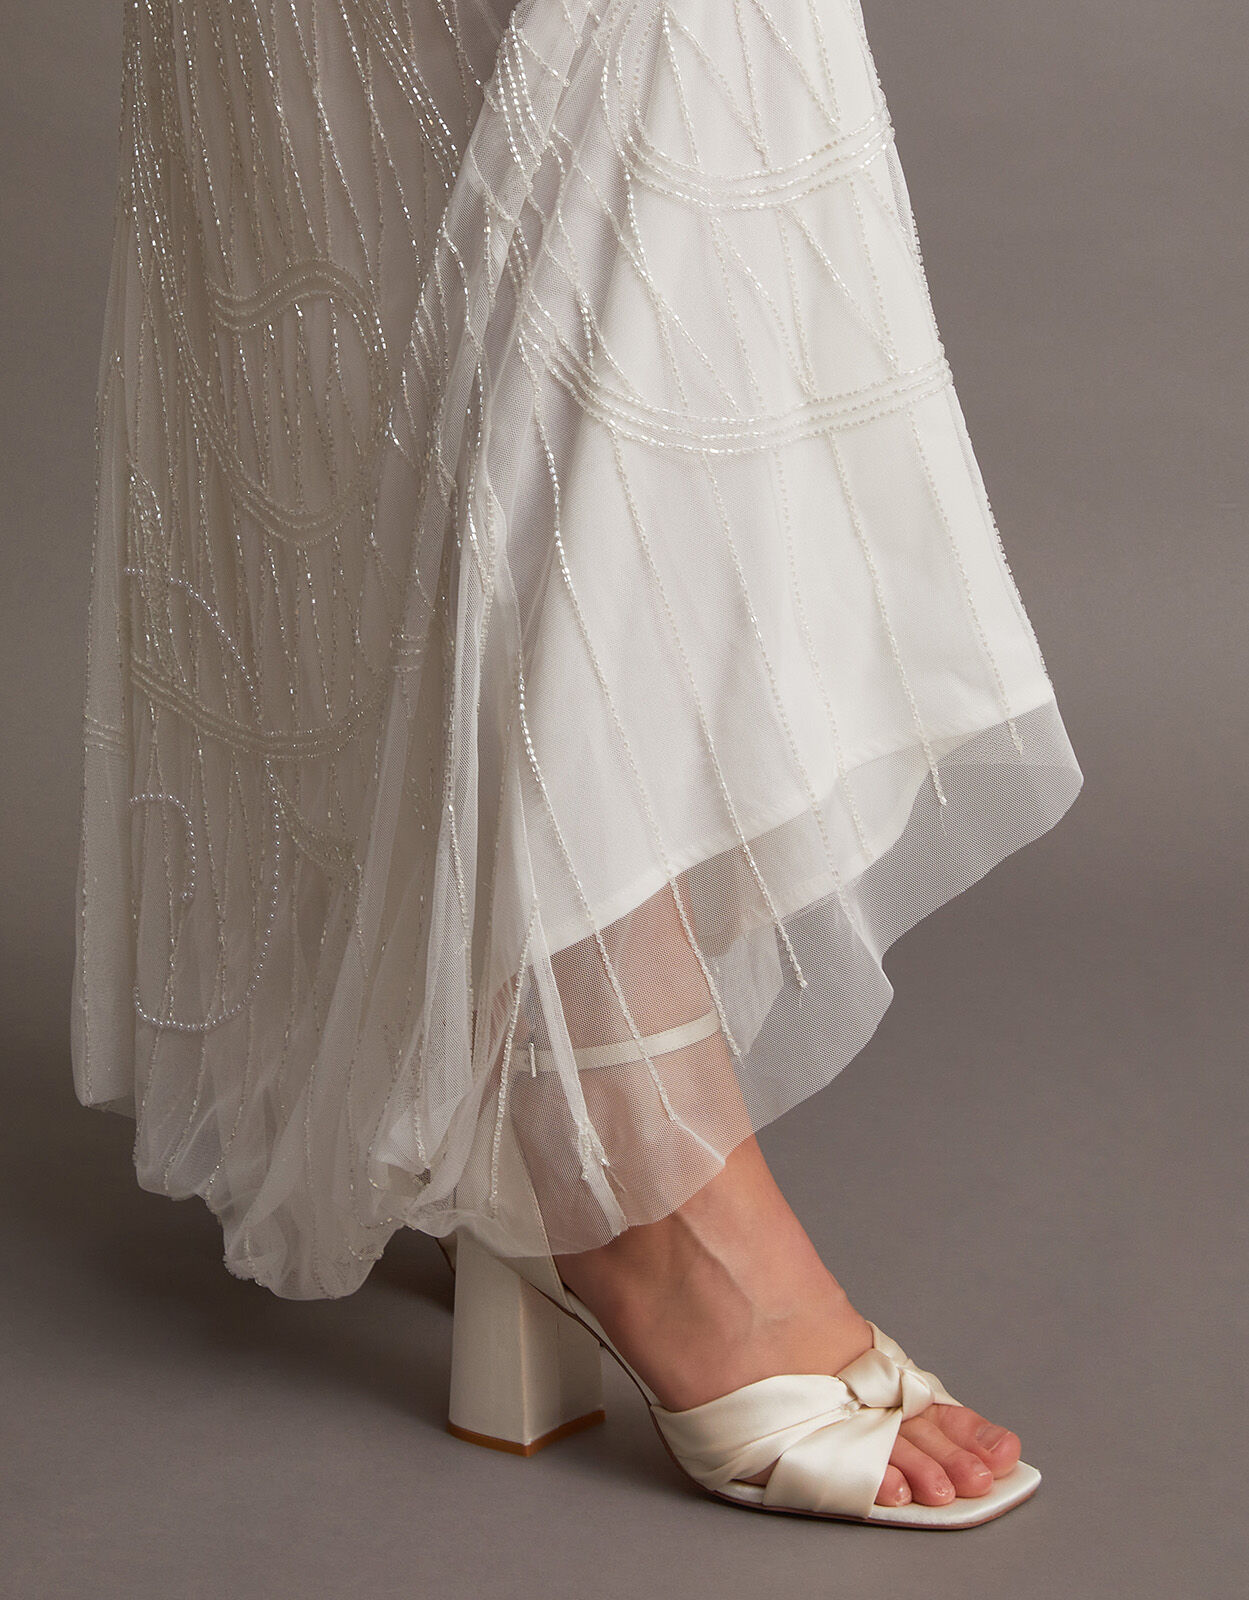 Premium Photo | The bride is putting on wedding sandals